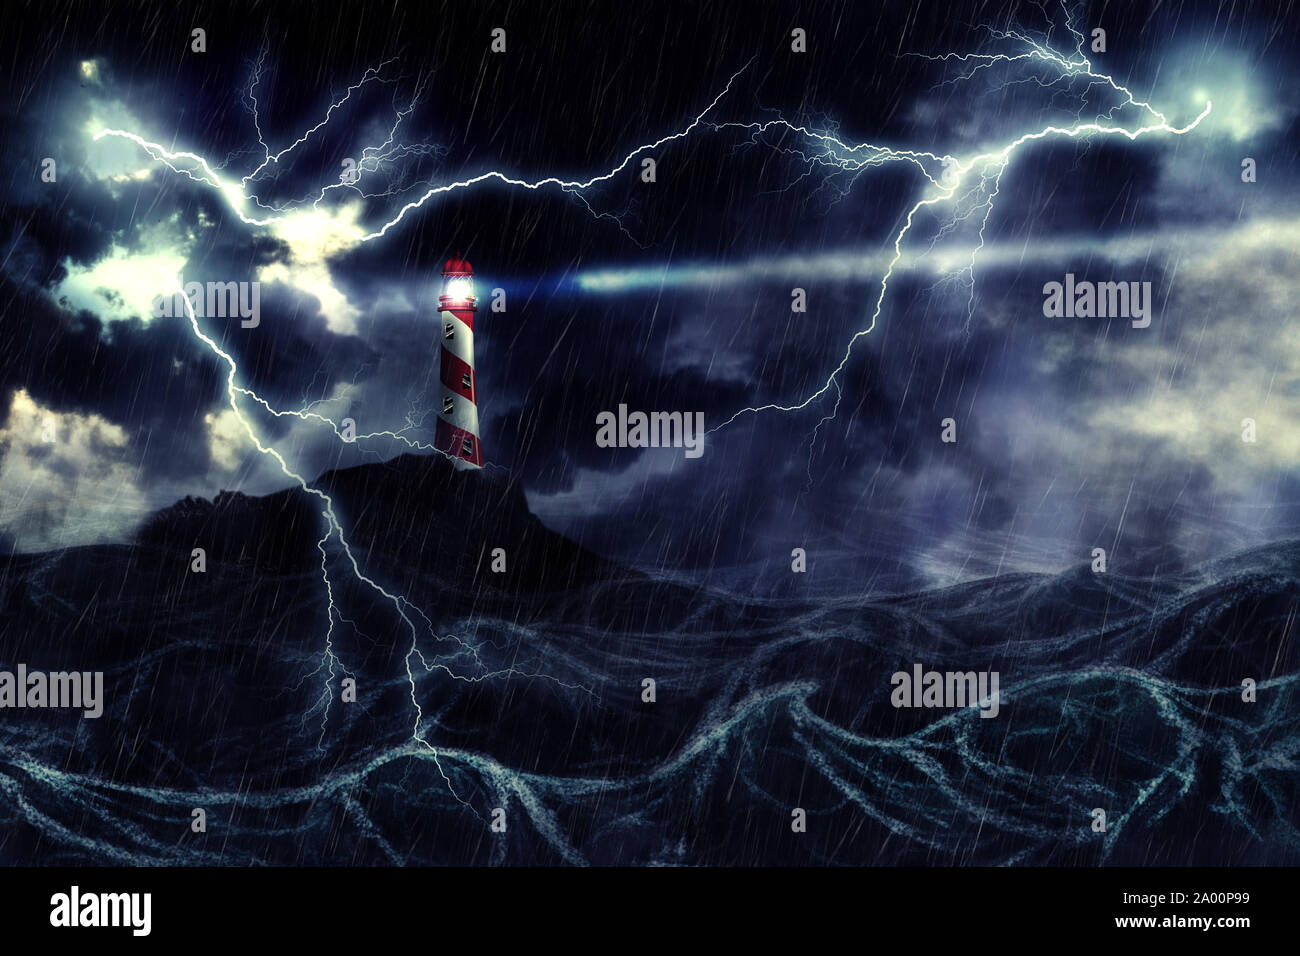 Lighthouse illuminated at night stormy sea in thunderstorm, digital illustration. Stock Photo